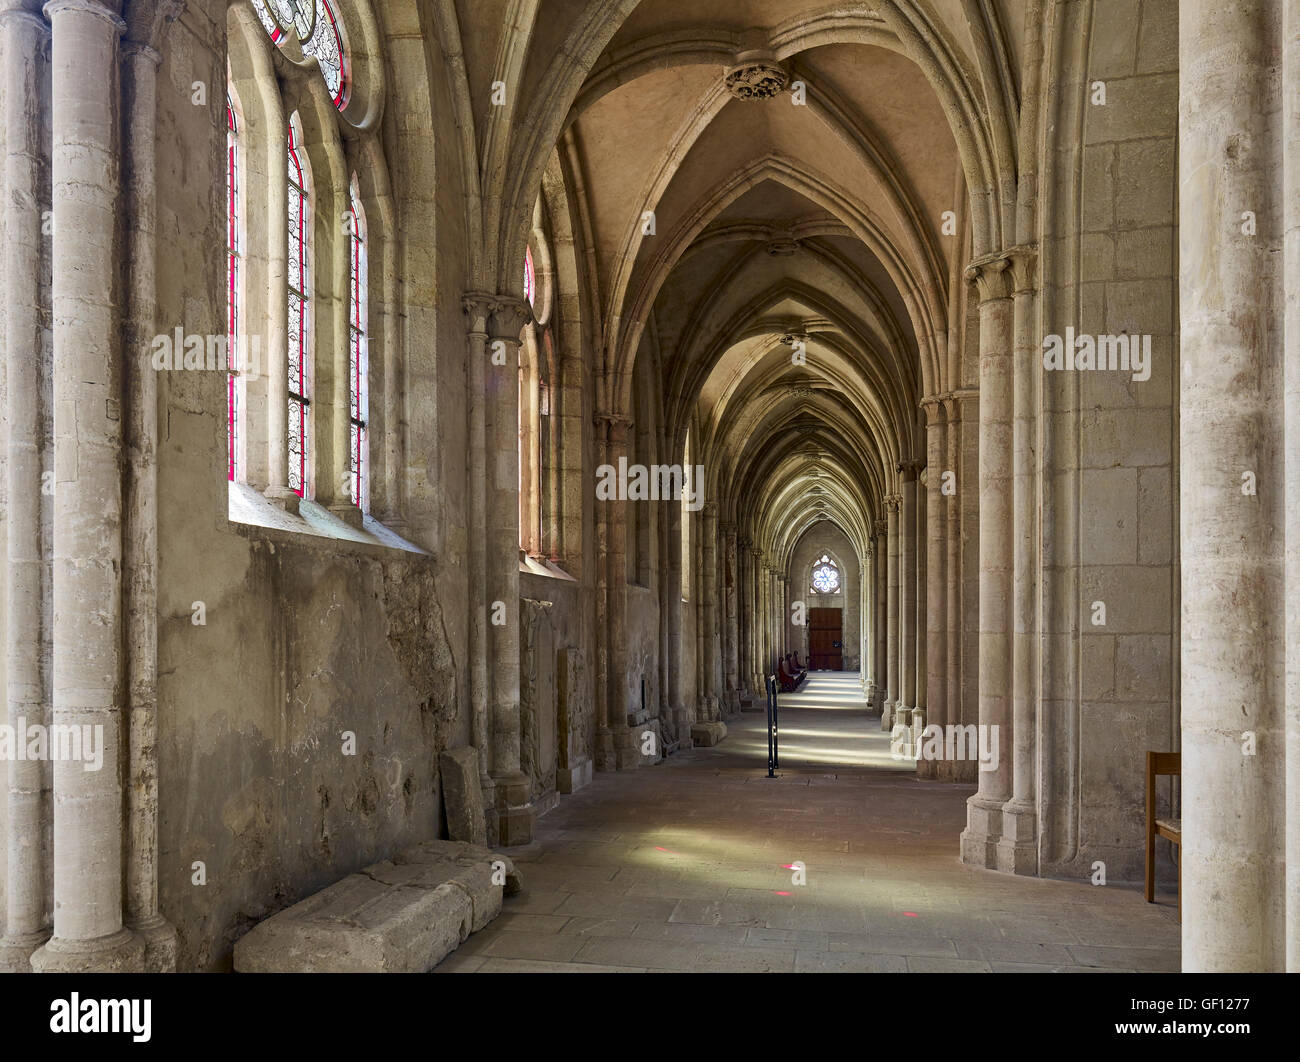 Choir of the convent church, Abbey Pforta, Germany Stock Photo